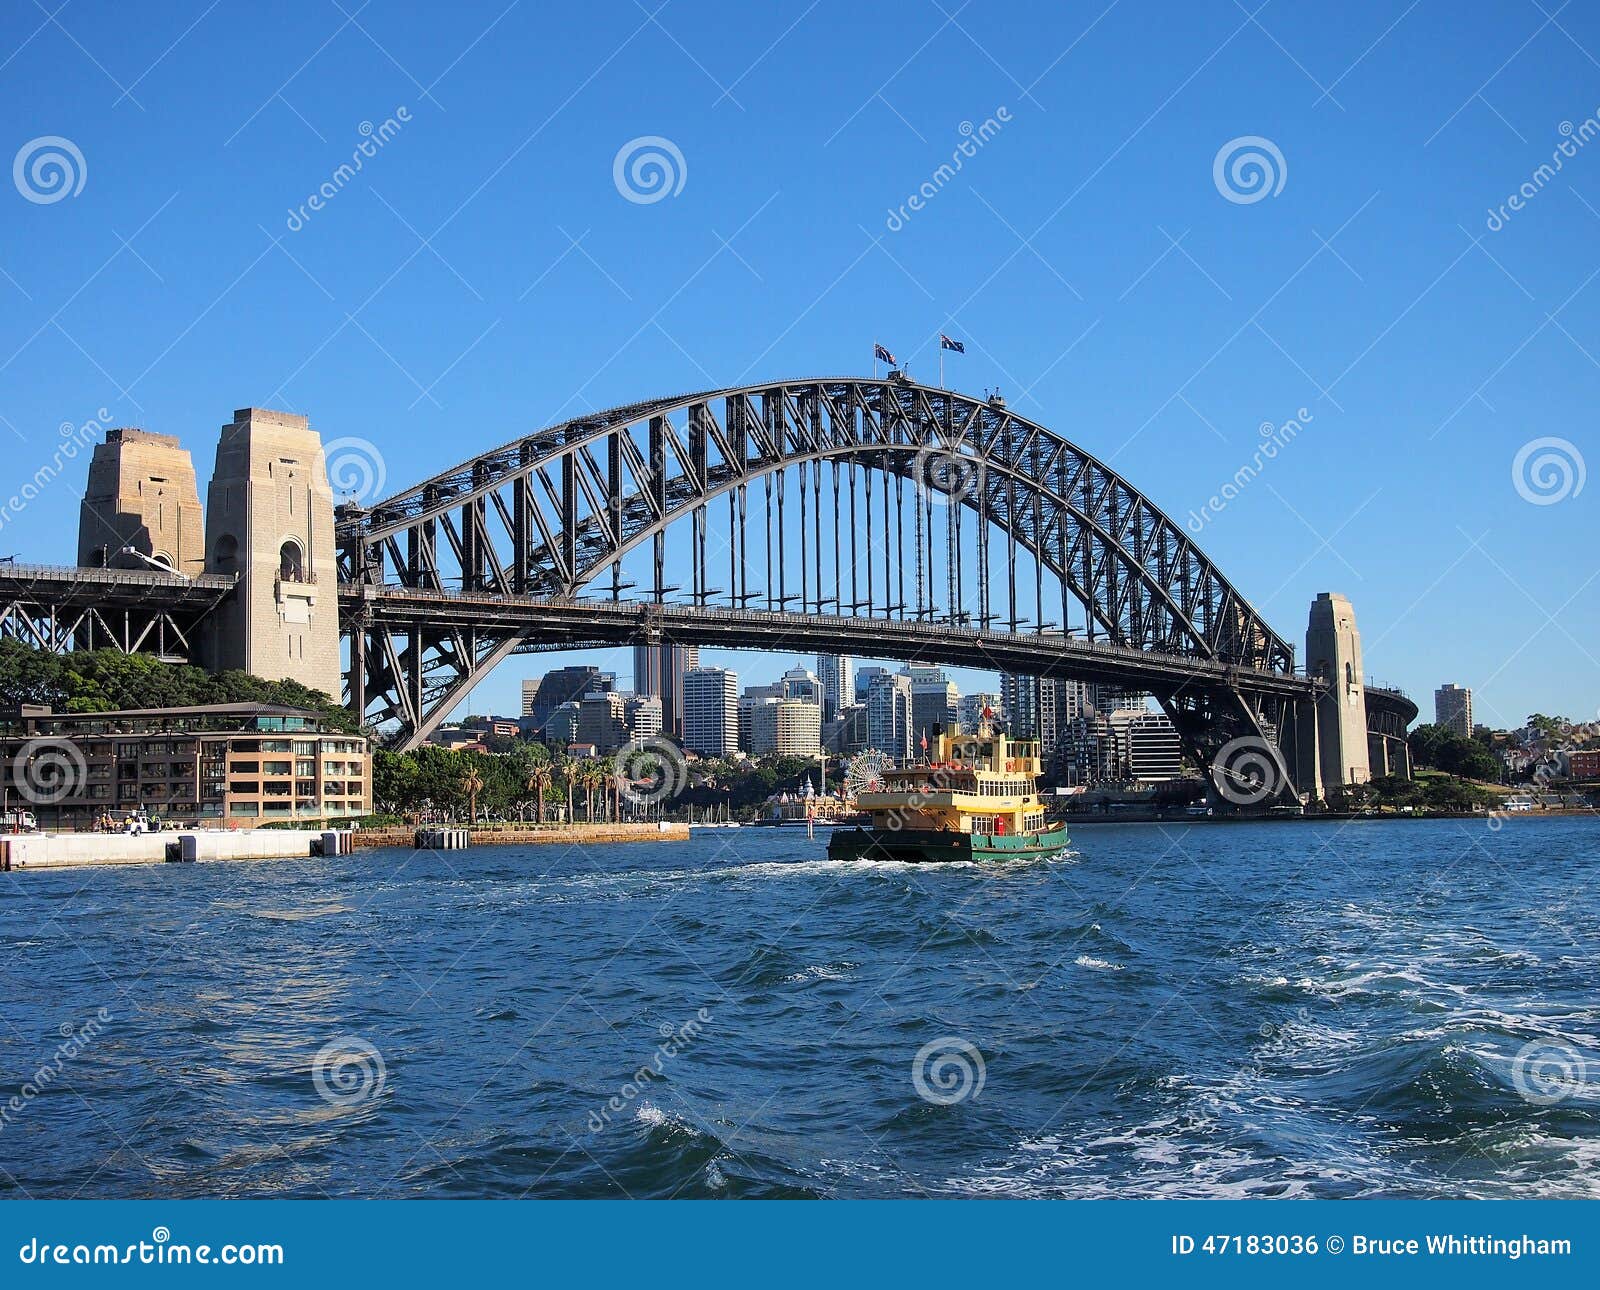 sydney harbour bridge and ferry, australia